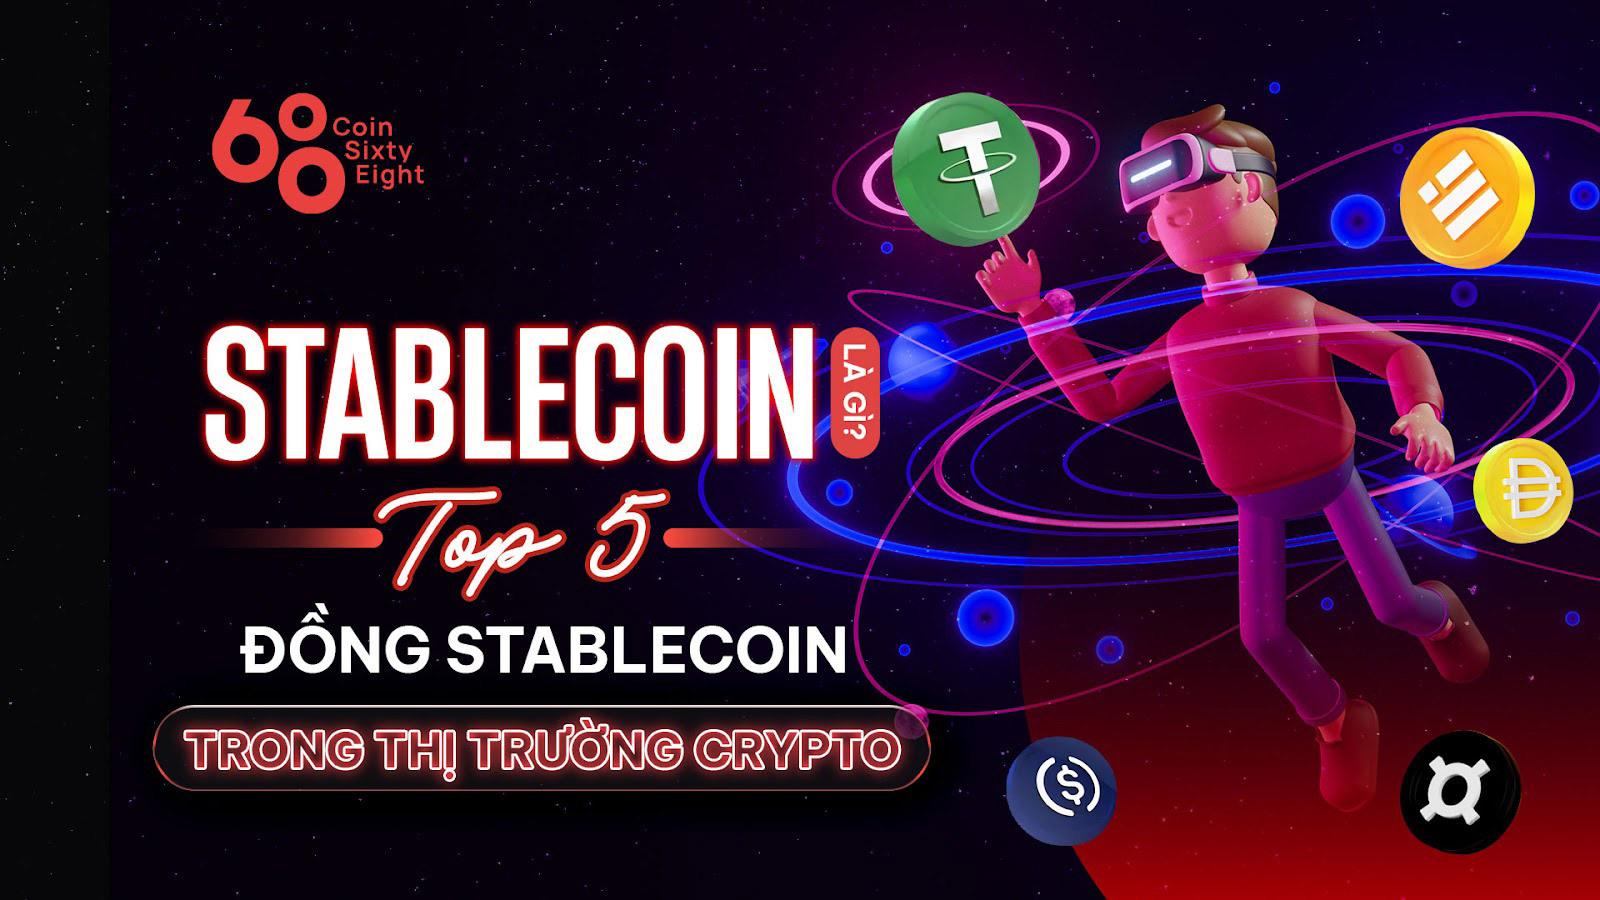 stablecoin-la-gi-top-5-dong-stablecoin-trong-thi-truong-crypto